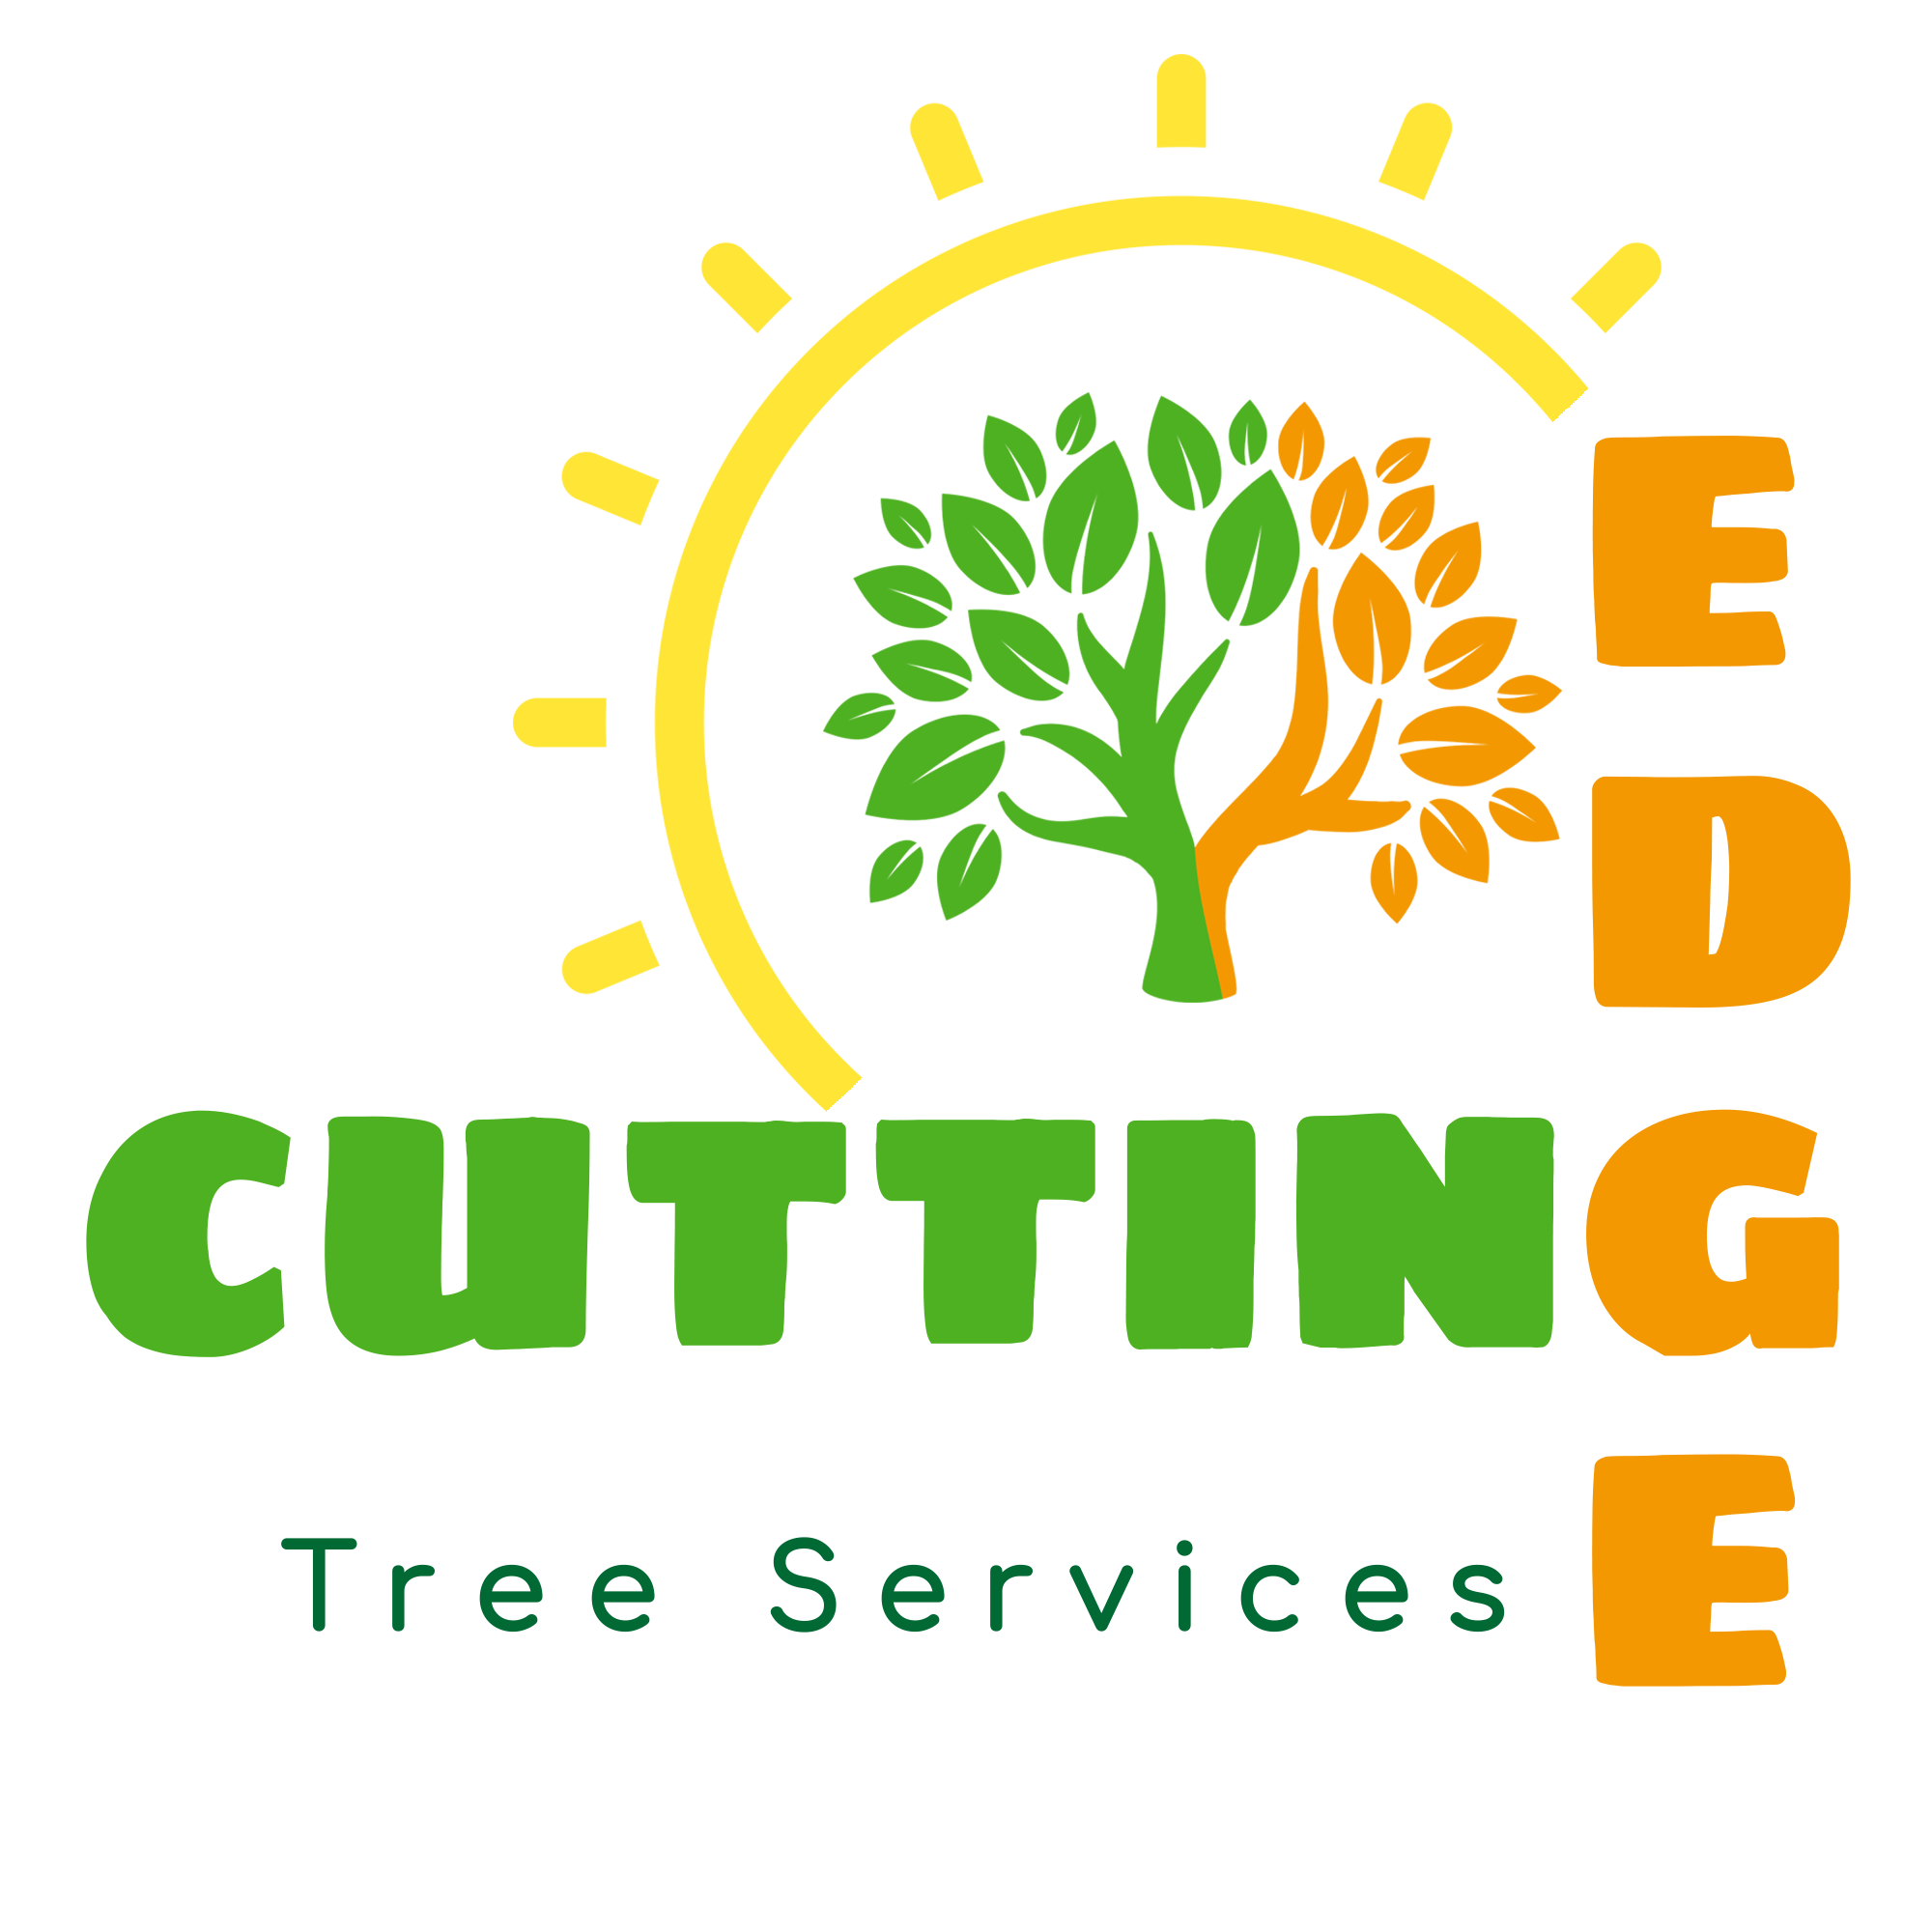 Cutting Edge Tree Service Logo